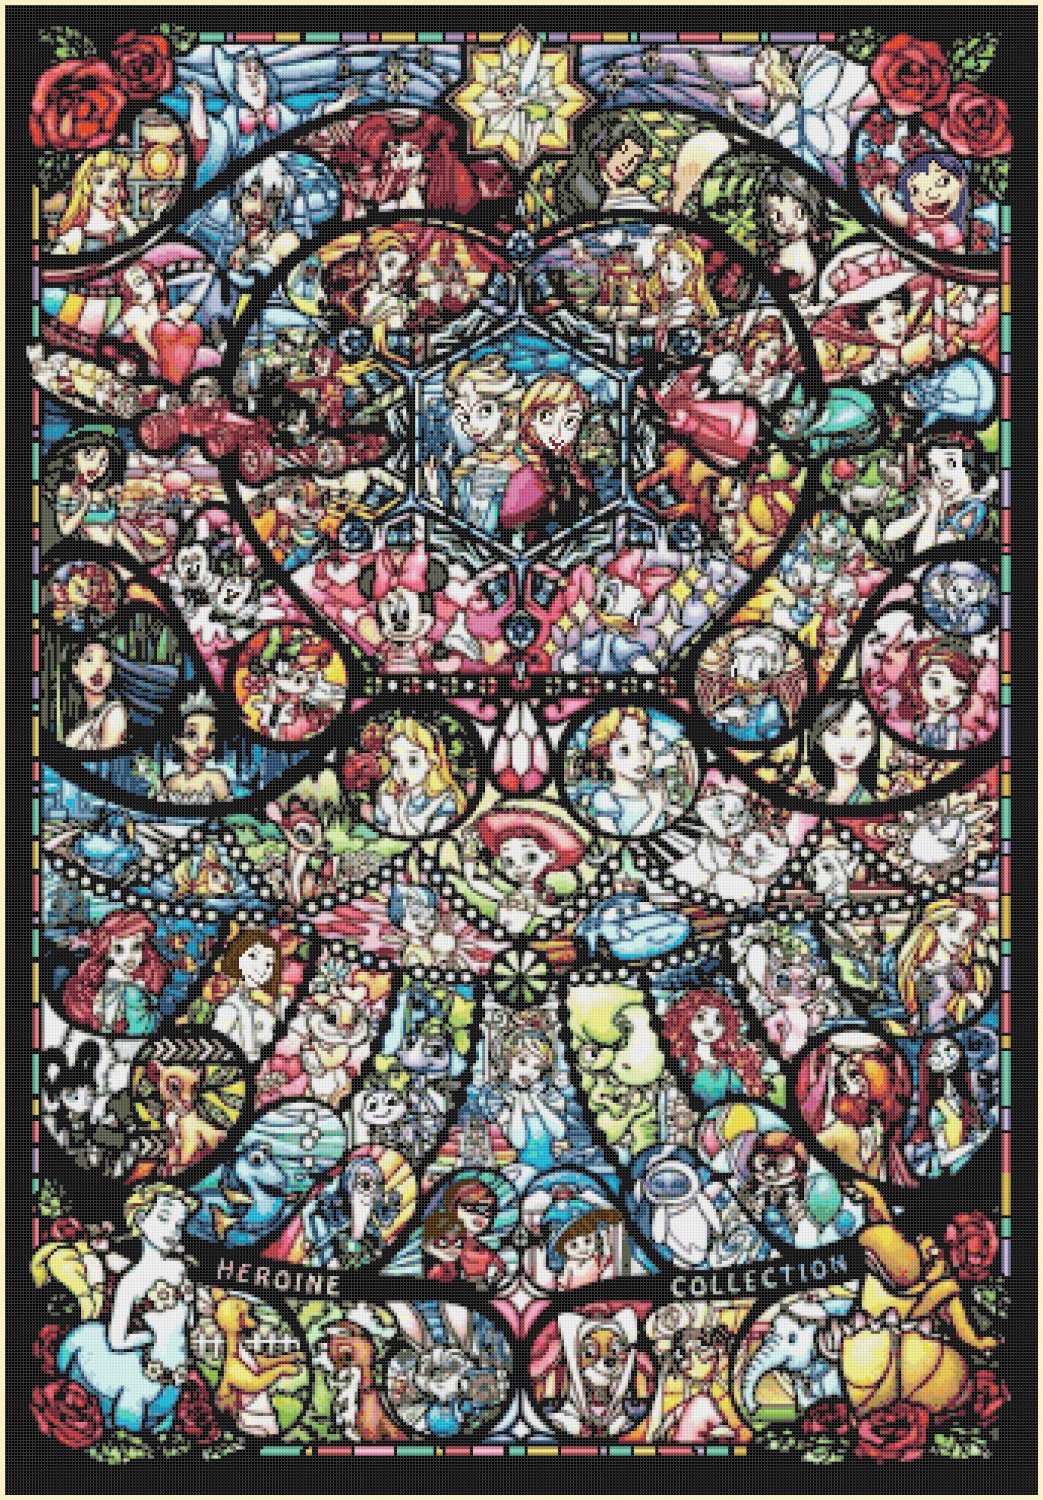 Disney heroine pattern glass Cross Stitch Pattern pdf  - 24.29" x 35.00" - E1350